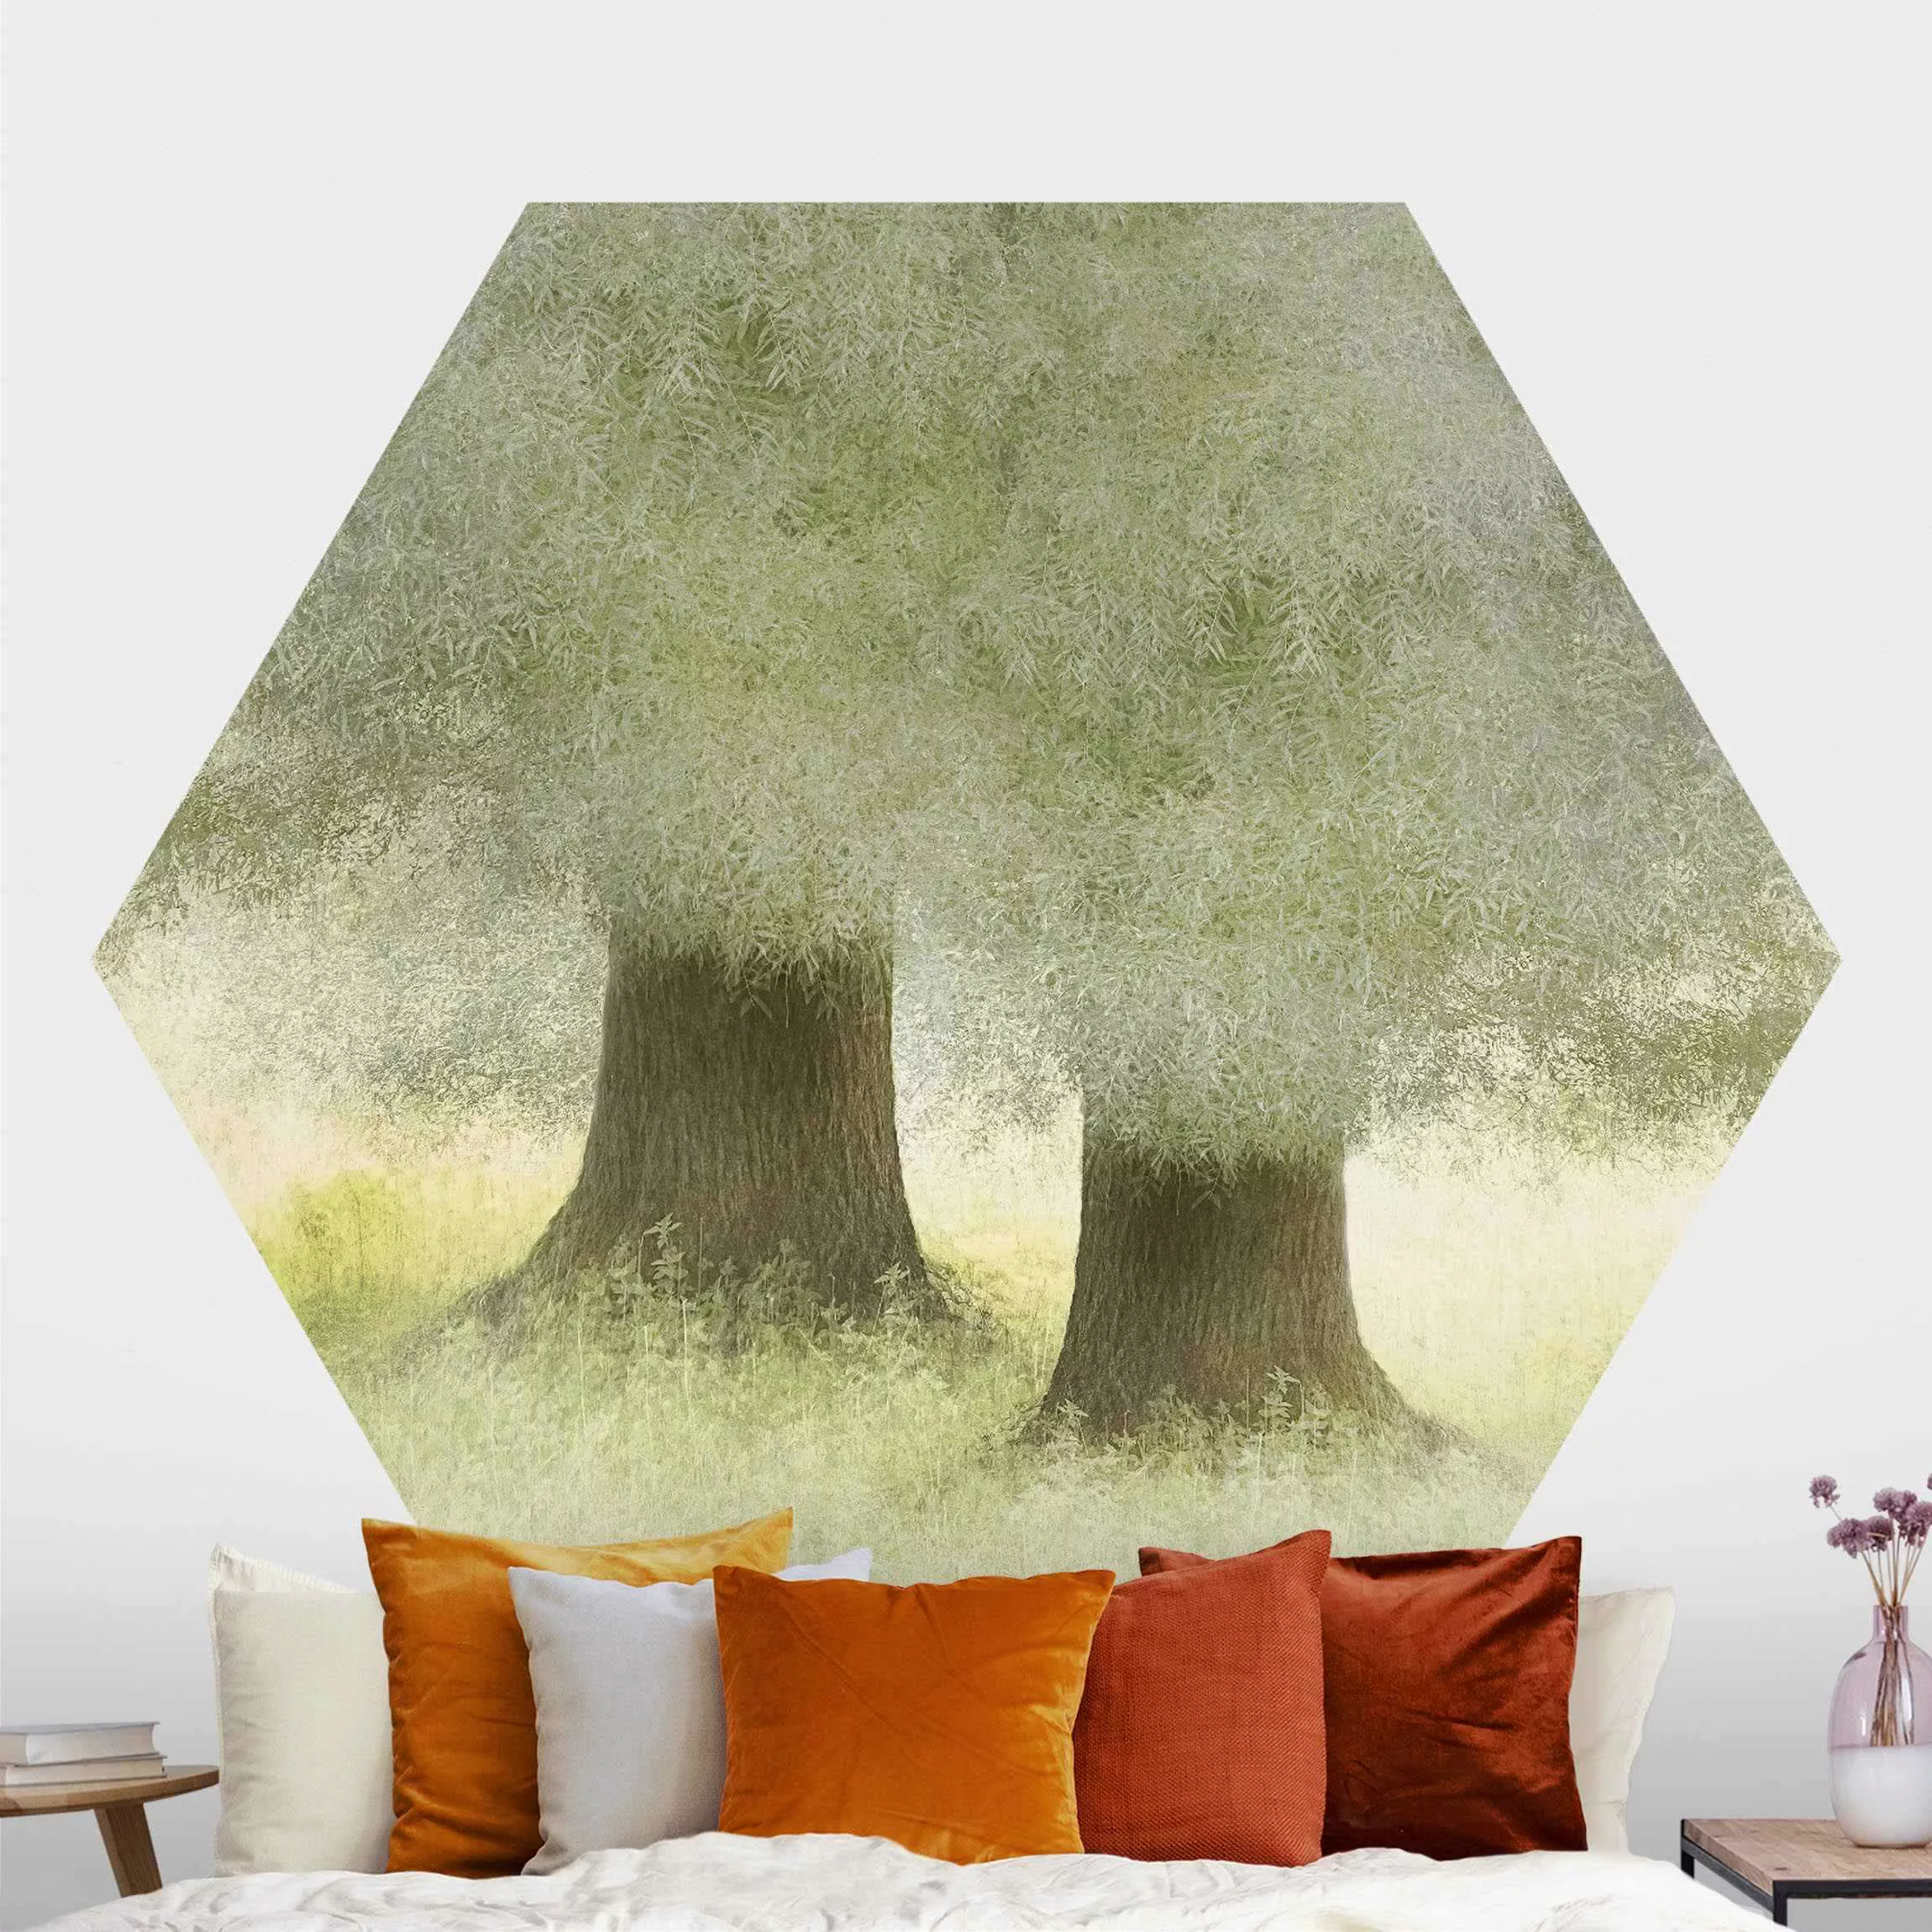 Hexagon Mustertapete selbstklebend Verträumtes Baumpaar günstig online kaufen